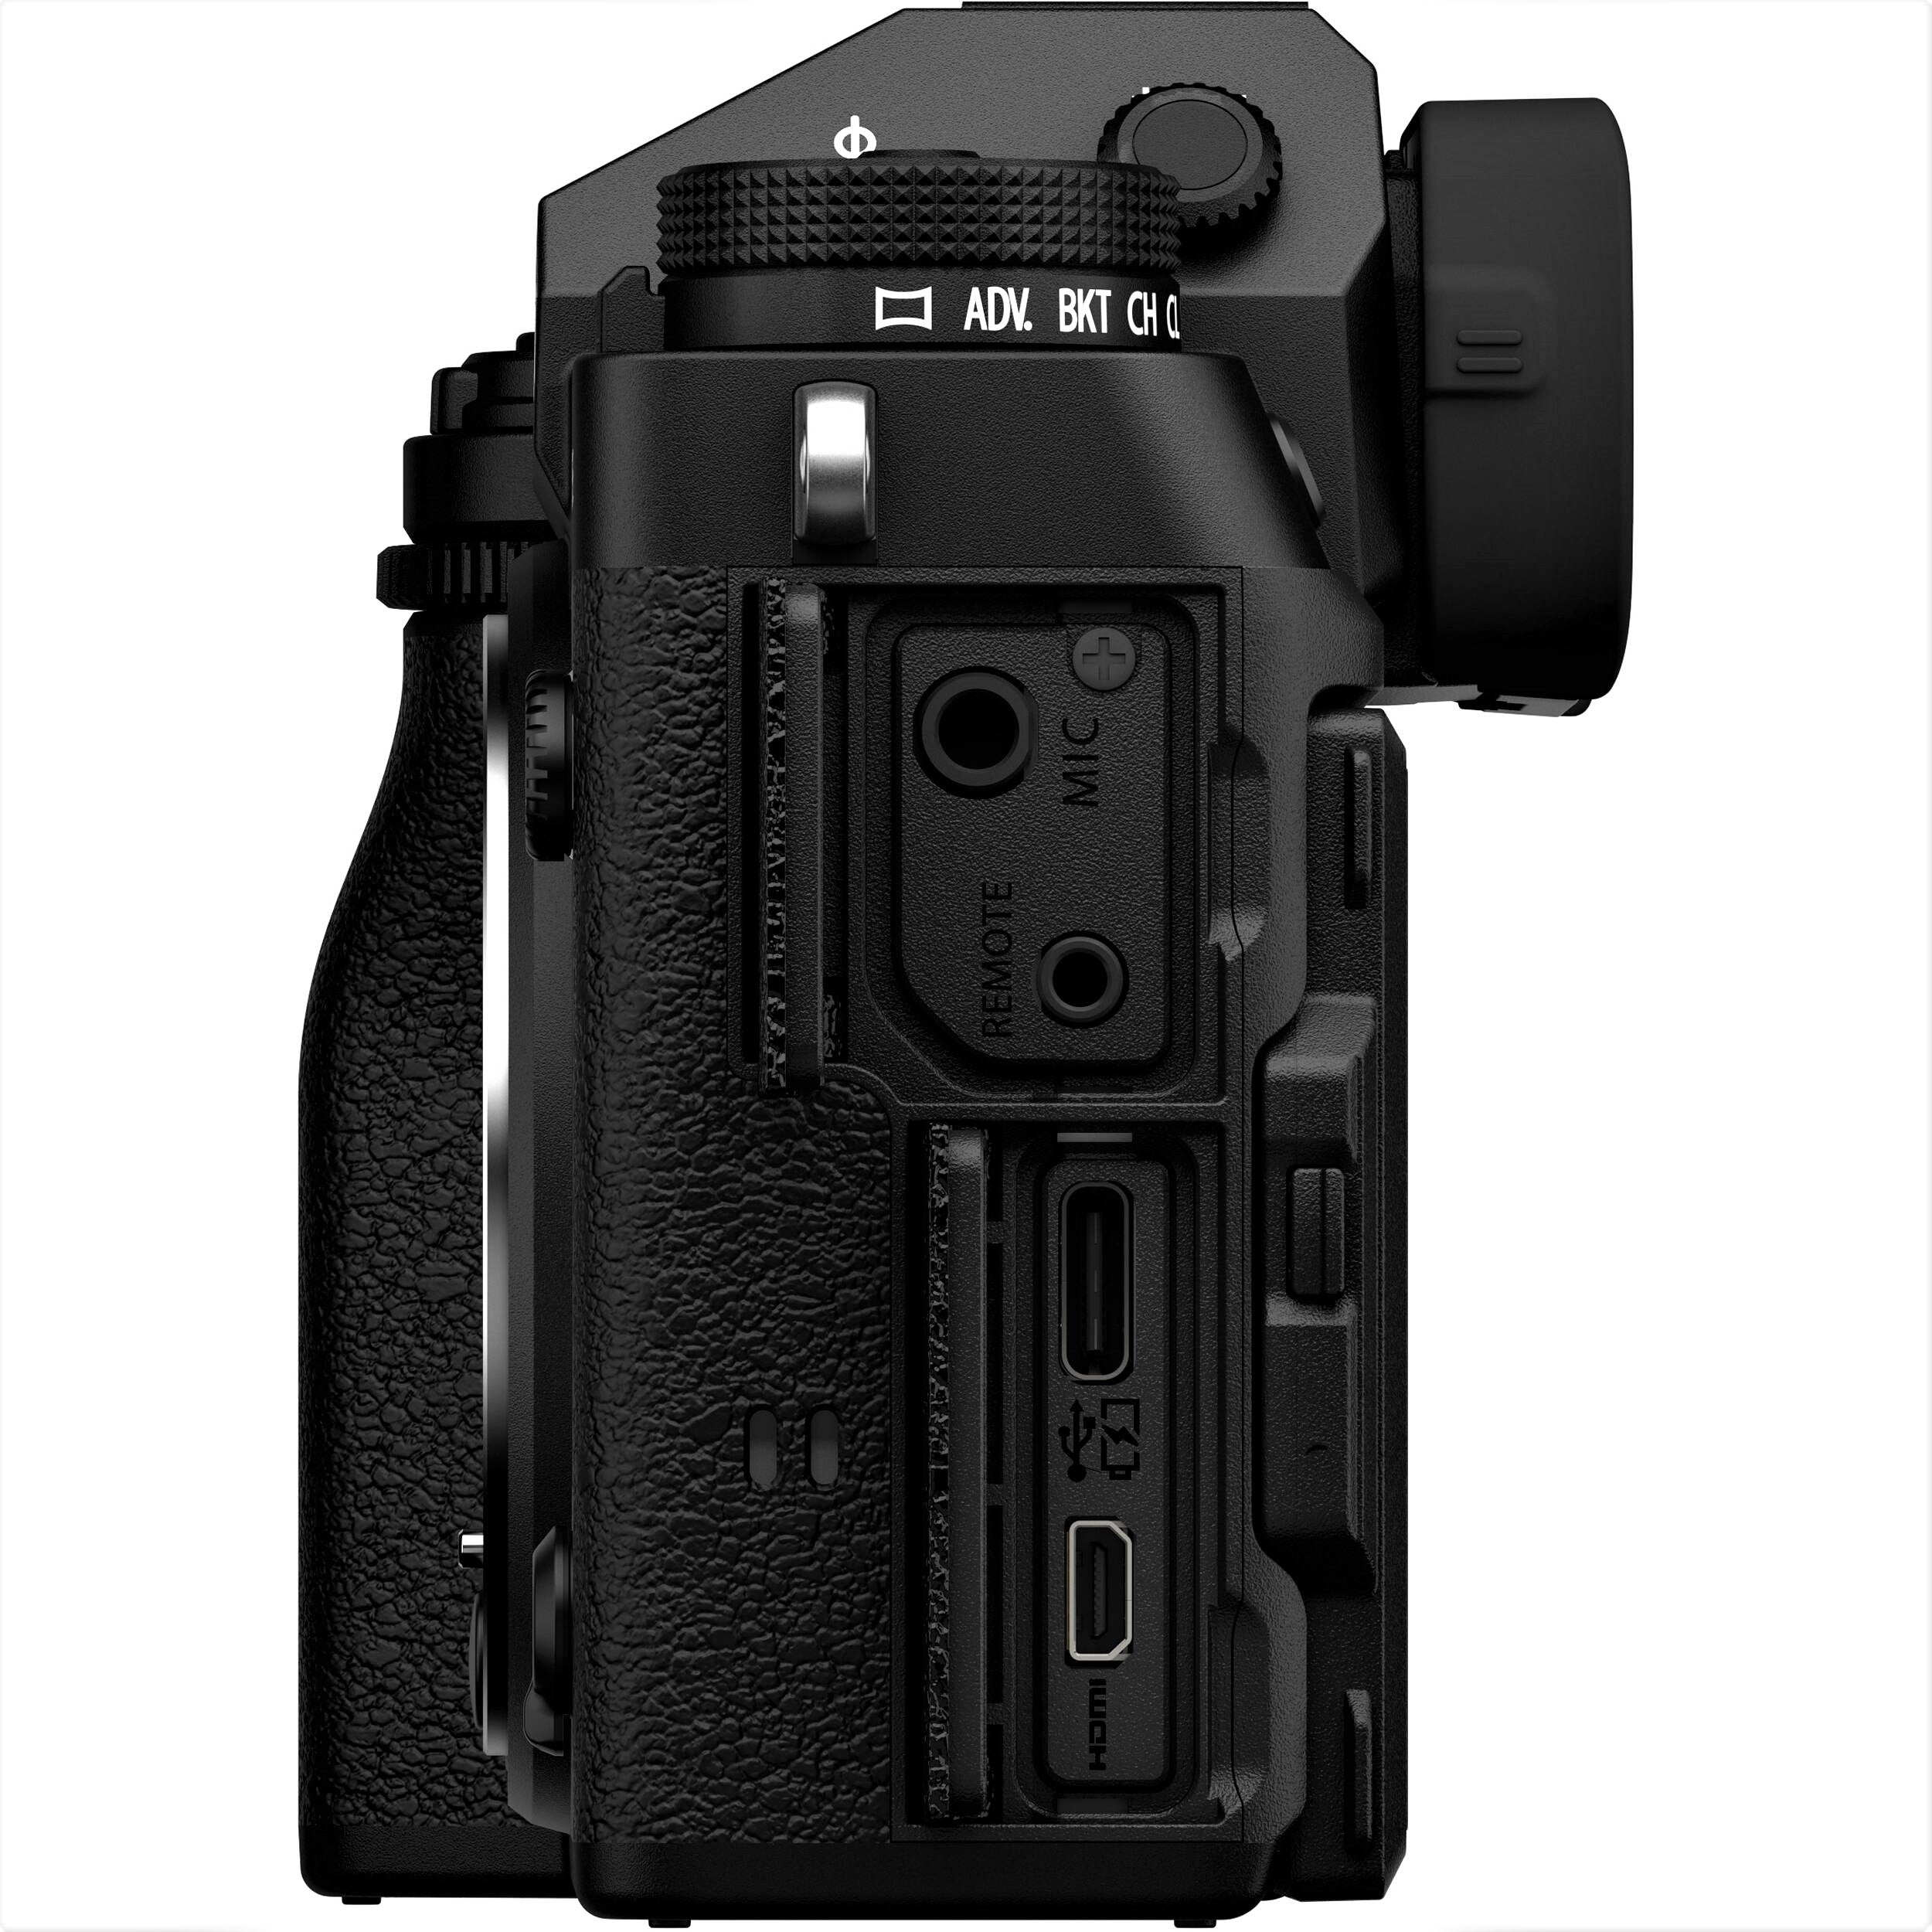 Fujifilm X-T5 Mirrorless Camera with 18-55mm Lens (Black) - Ports